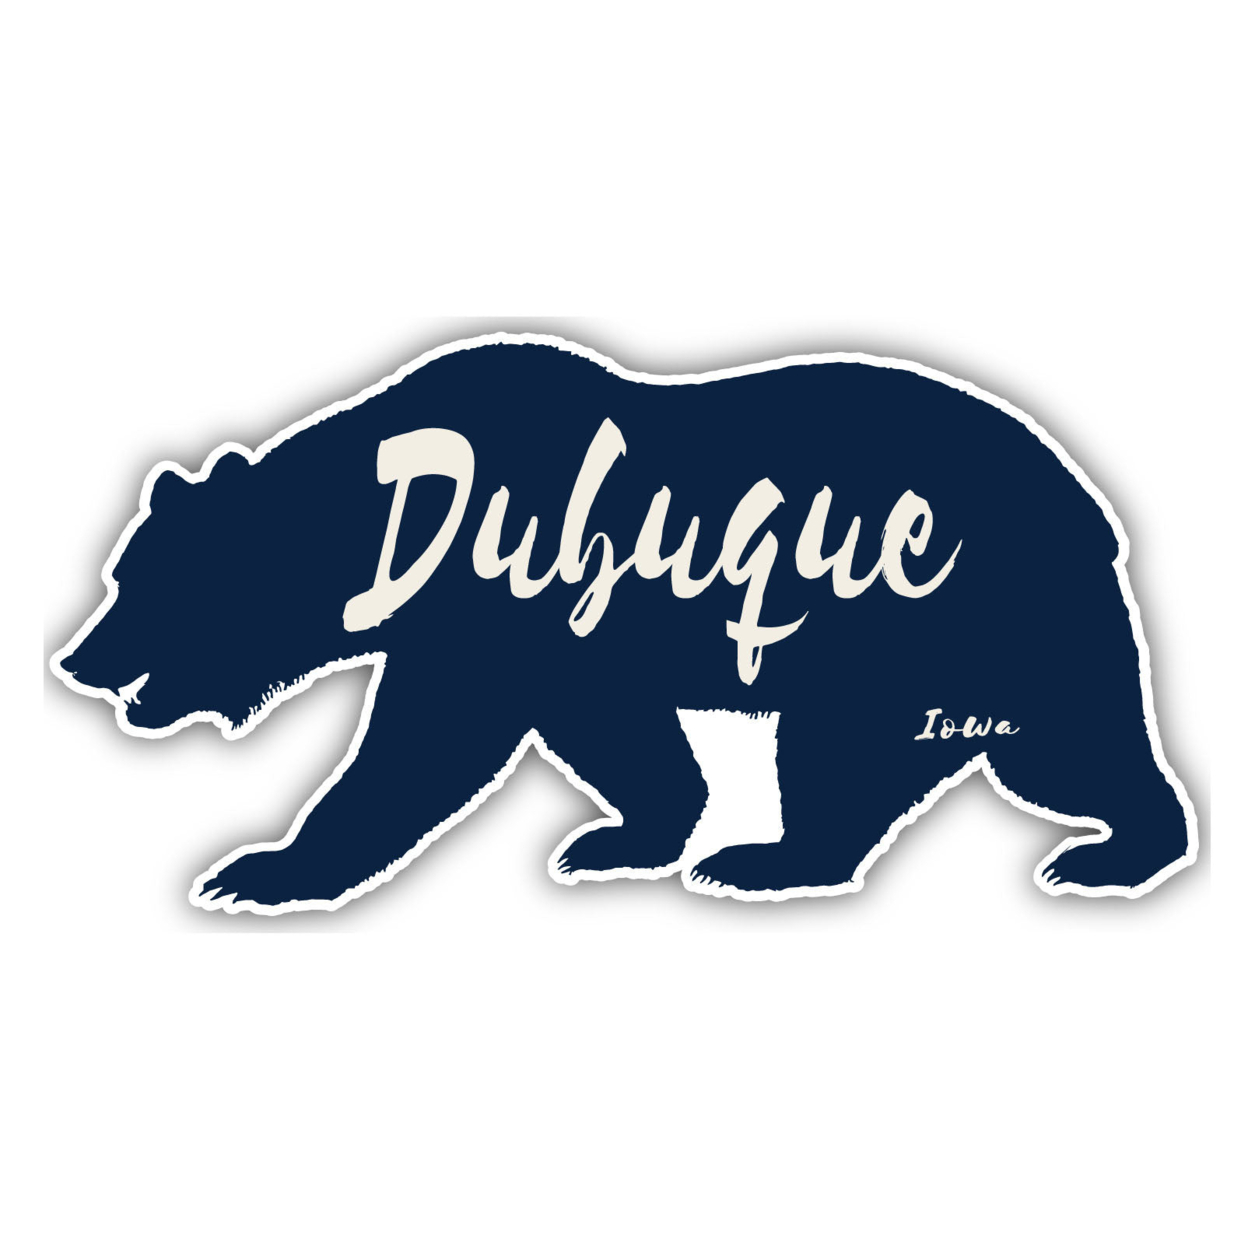 Dubuque Iowa Souvenir Decorative Stickers (Choose Theme And Size) - 4-Pack, 12-Inch, Bear